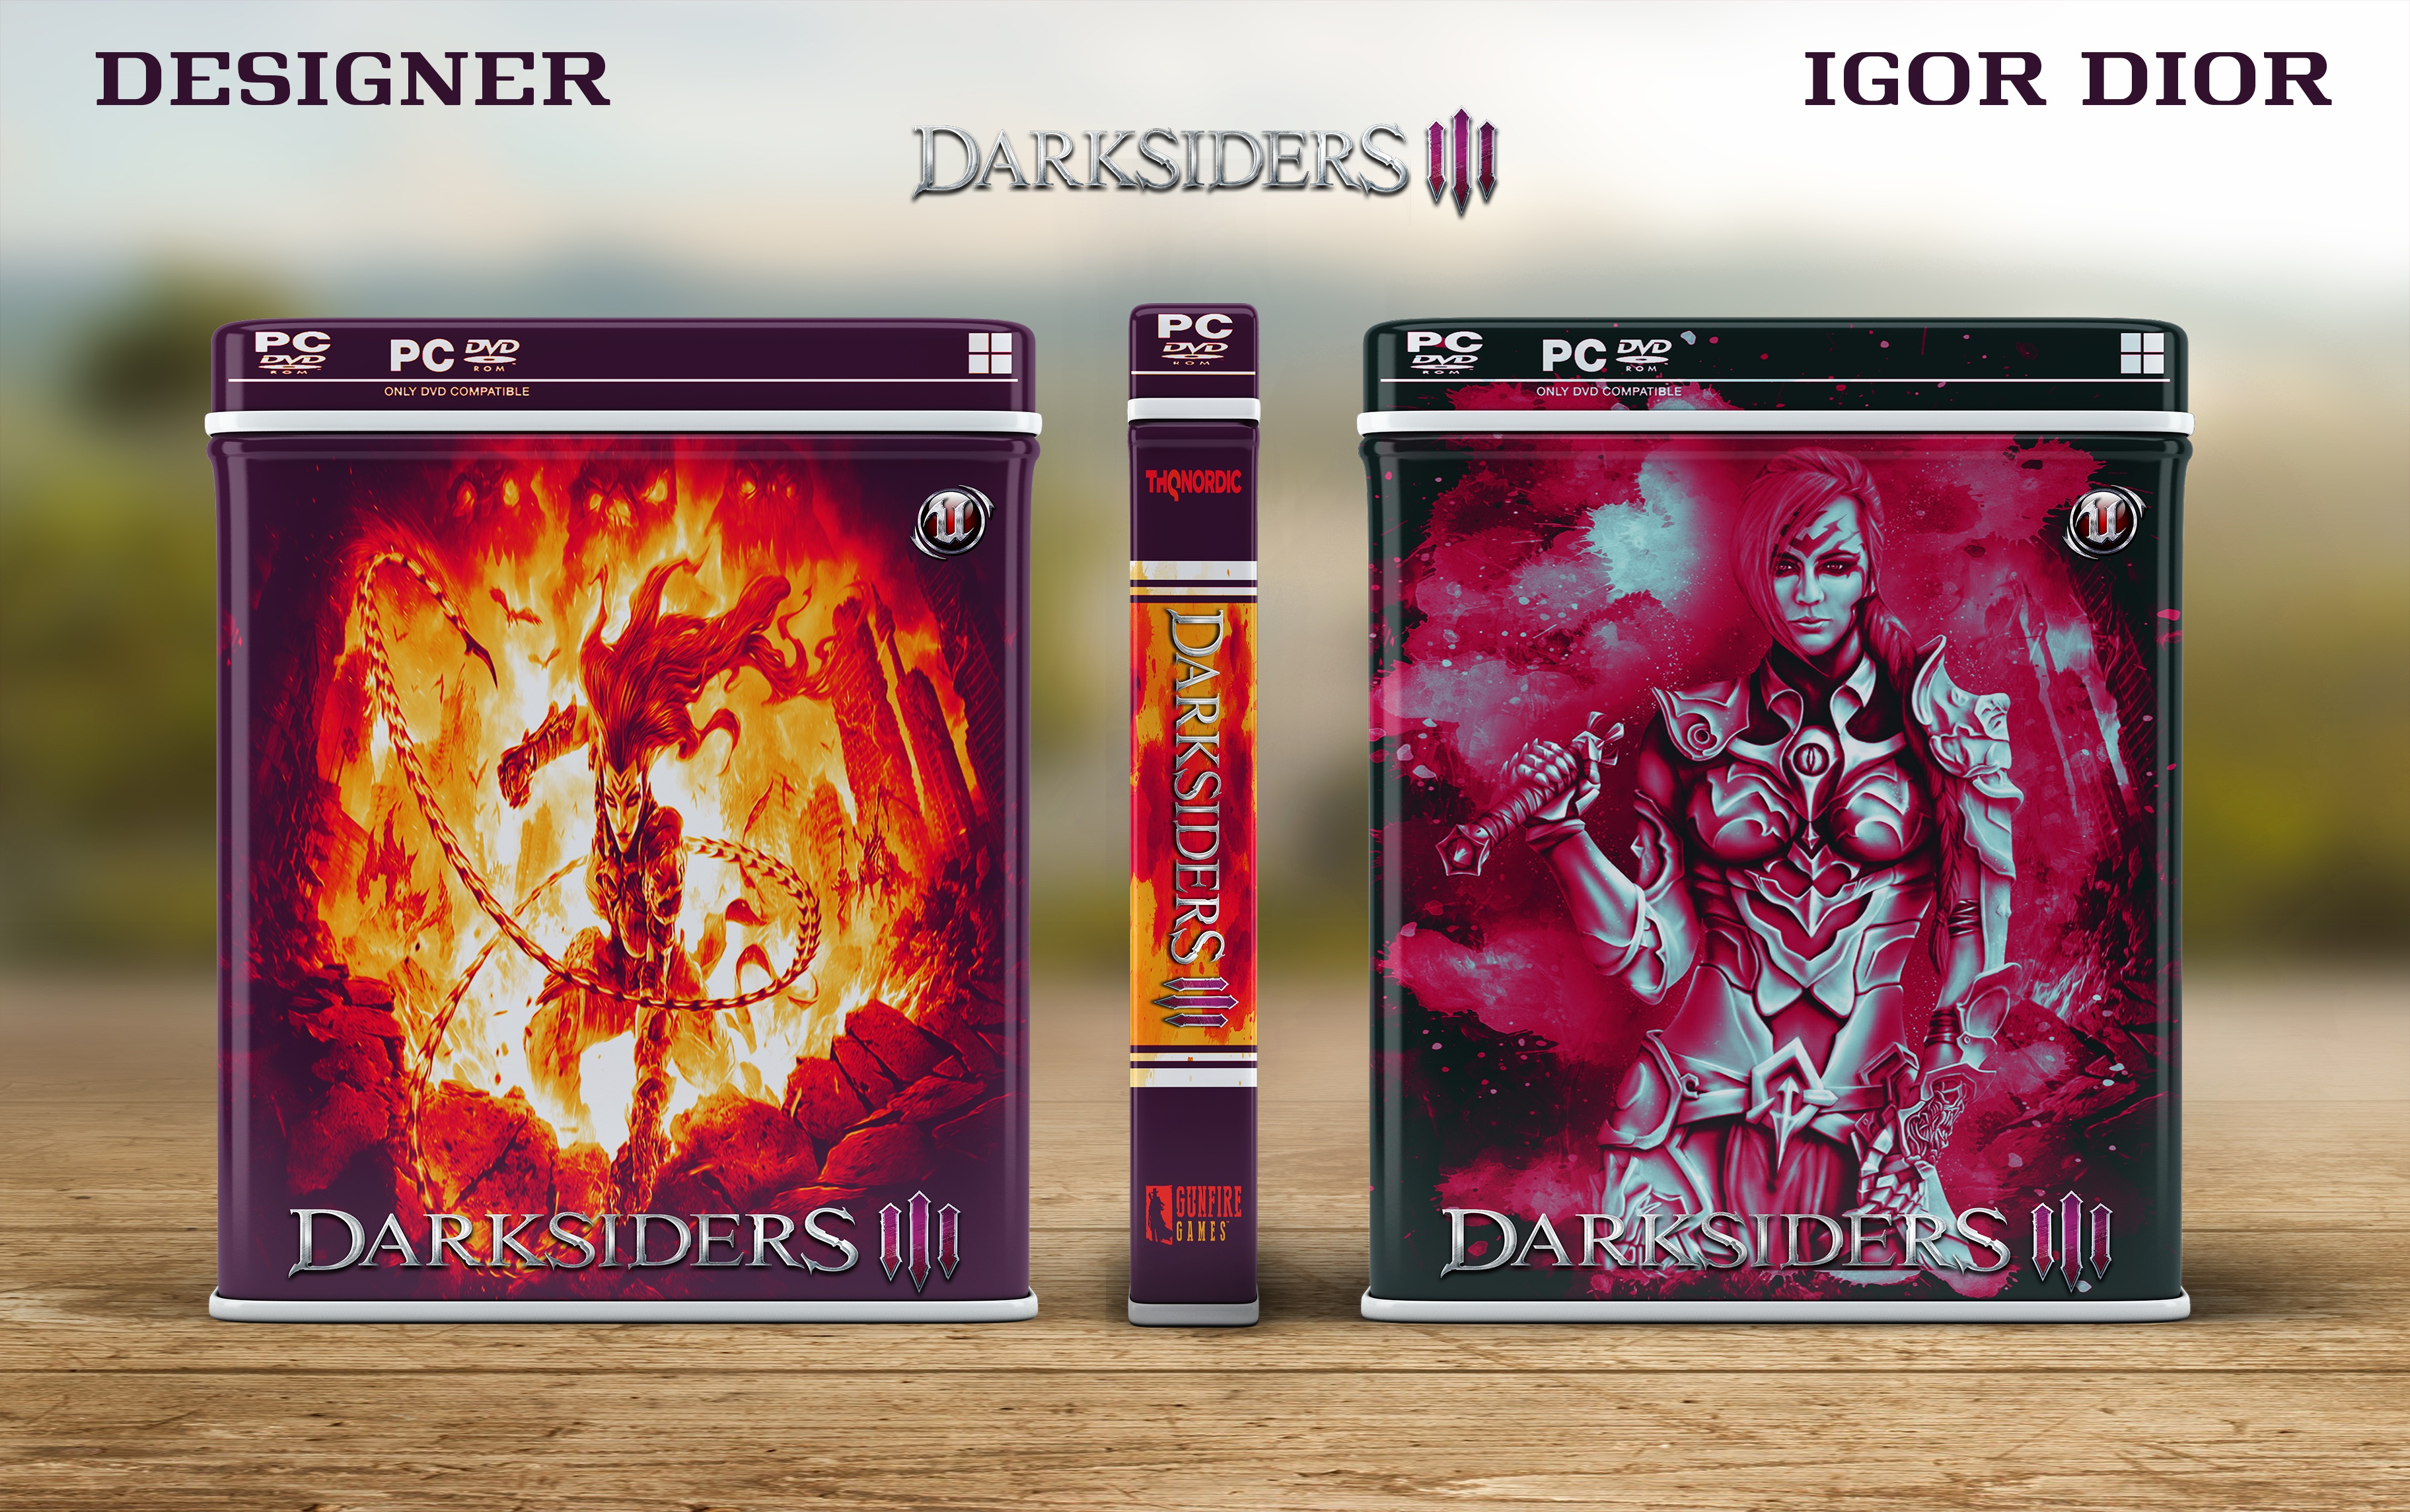 Darksiders III box cover